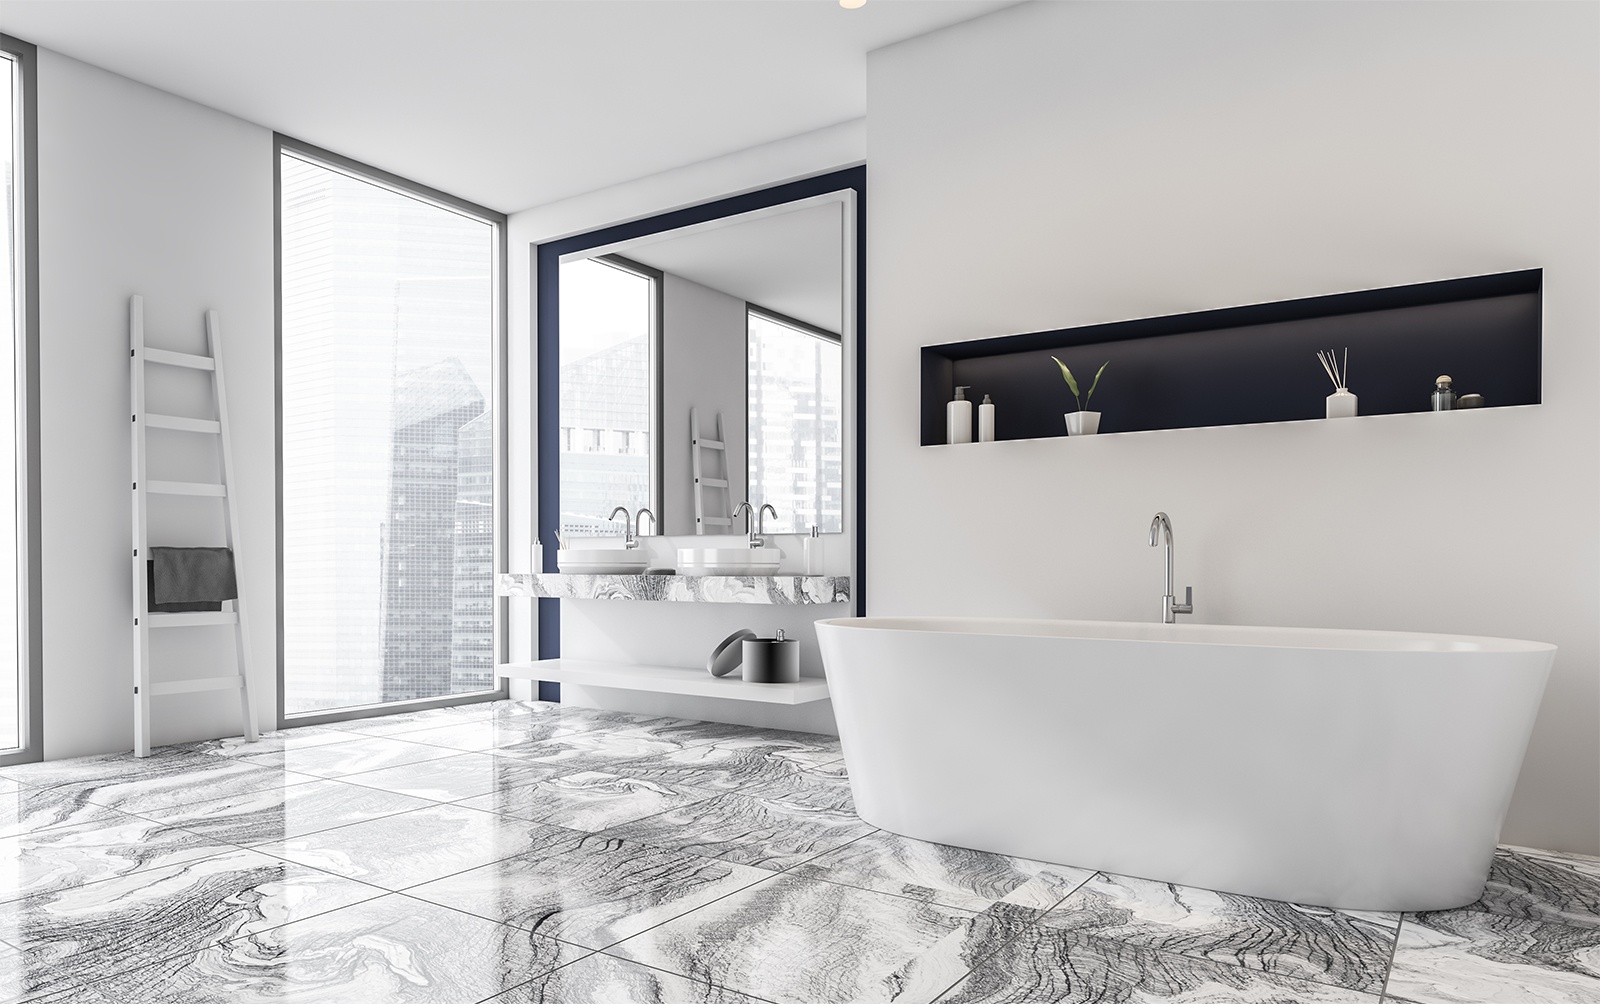 Bathroom Renovation Toronto at Bochner Design & Home